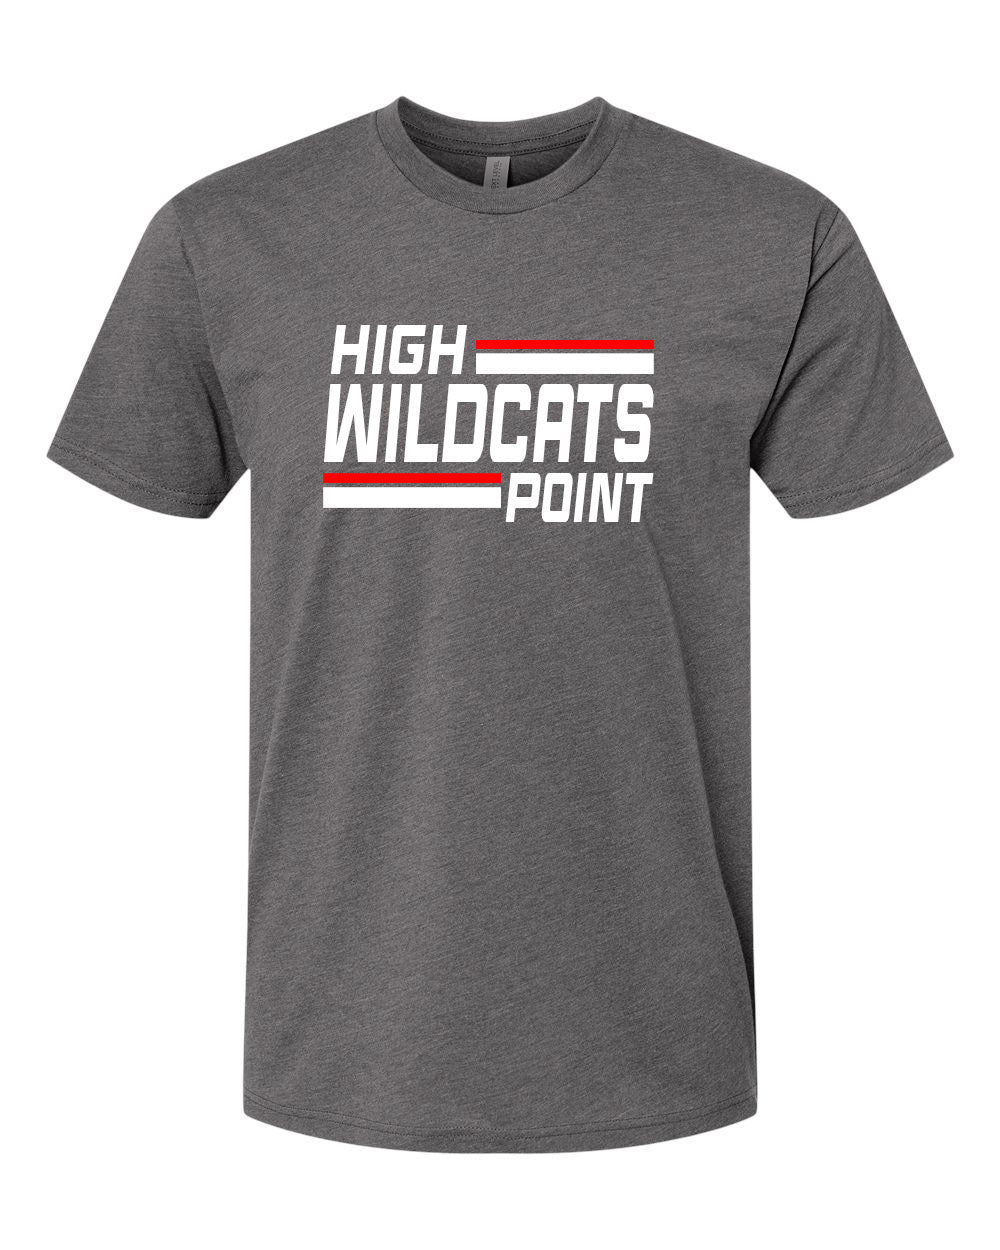 Wildcats Cheer design 4 T-Shirt